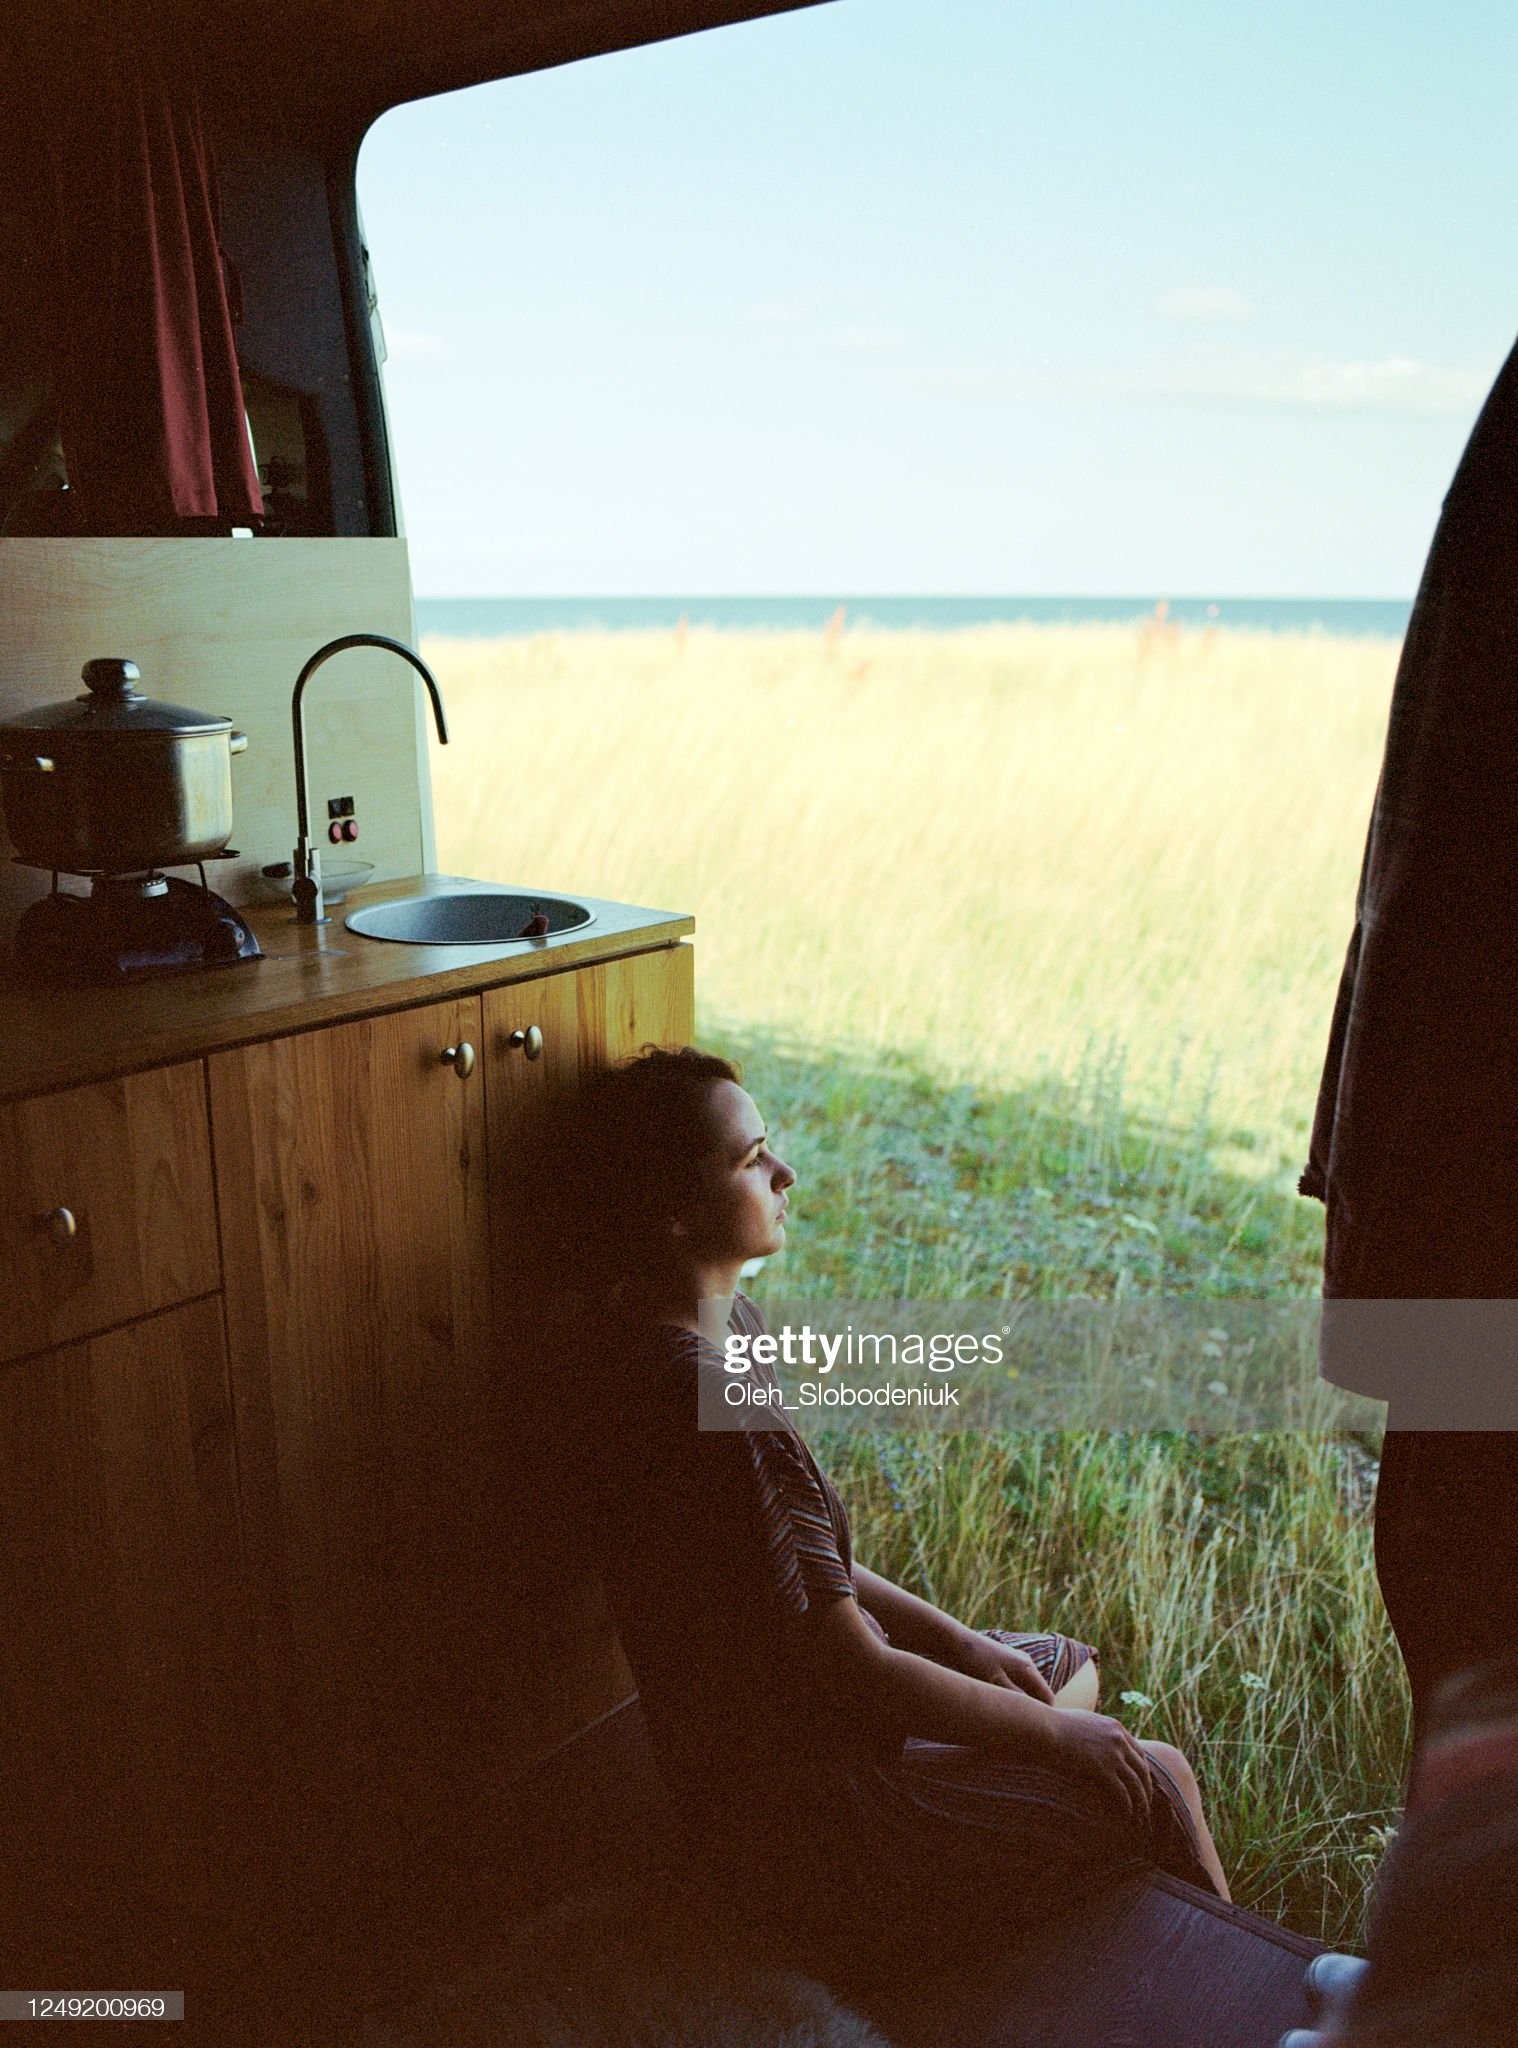 Young Estonian woman looking at scenics from camper van.